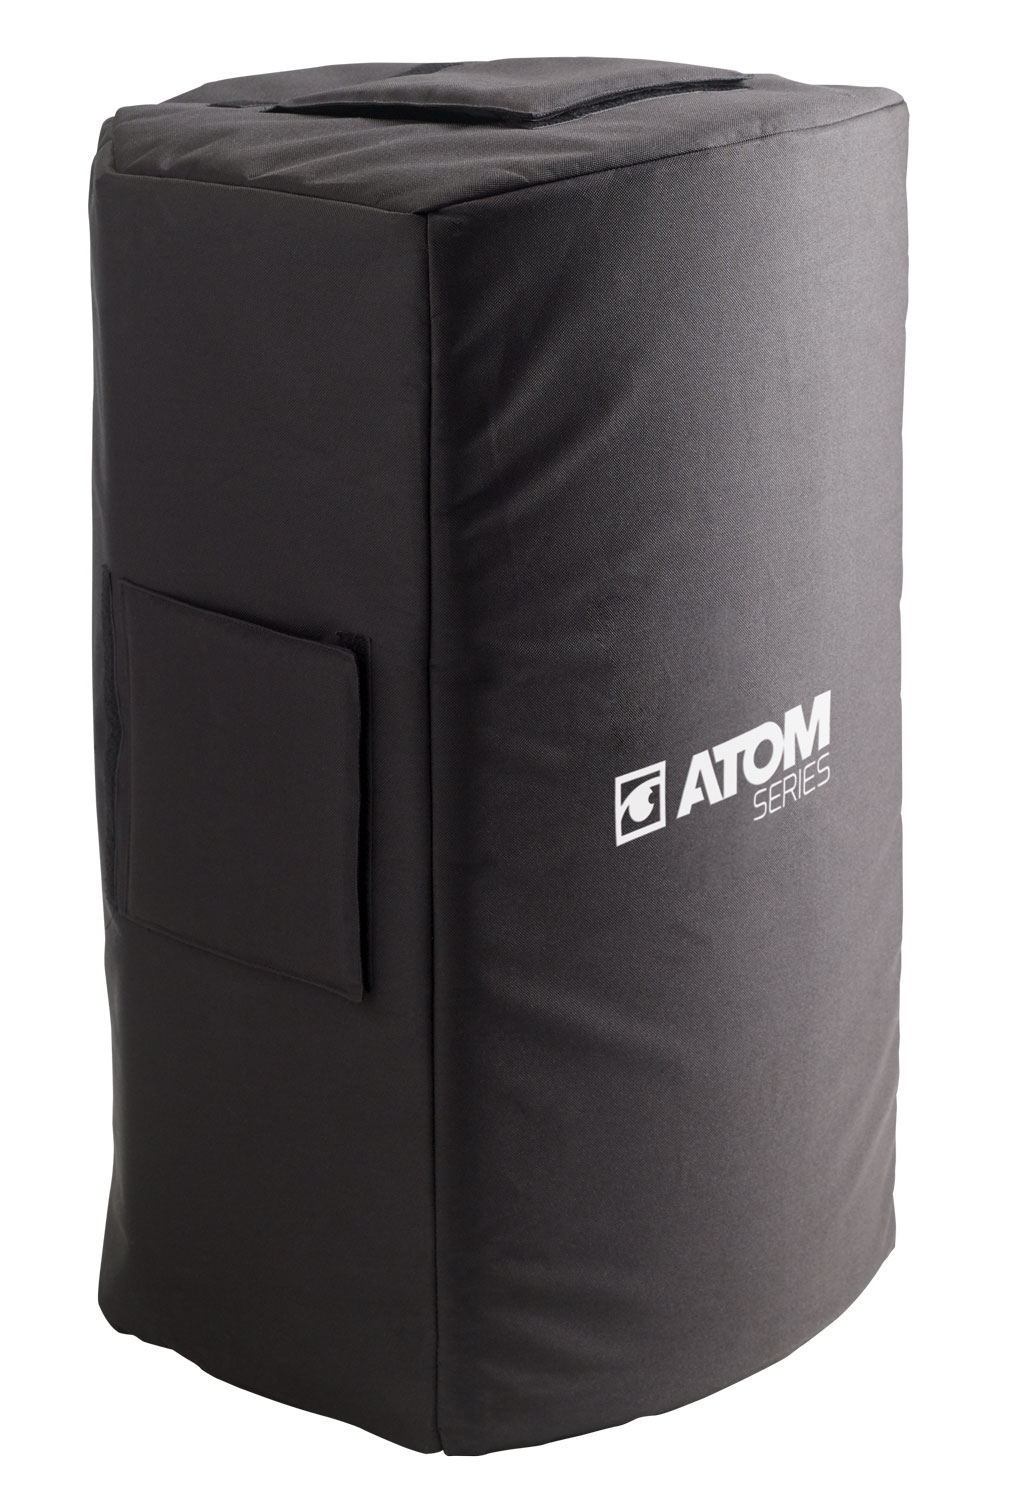 ATOM10A protective cover